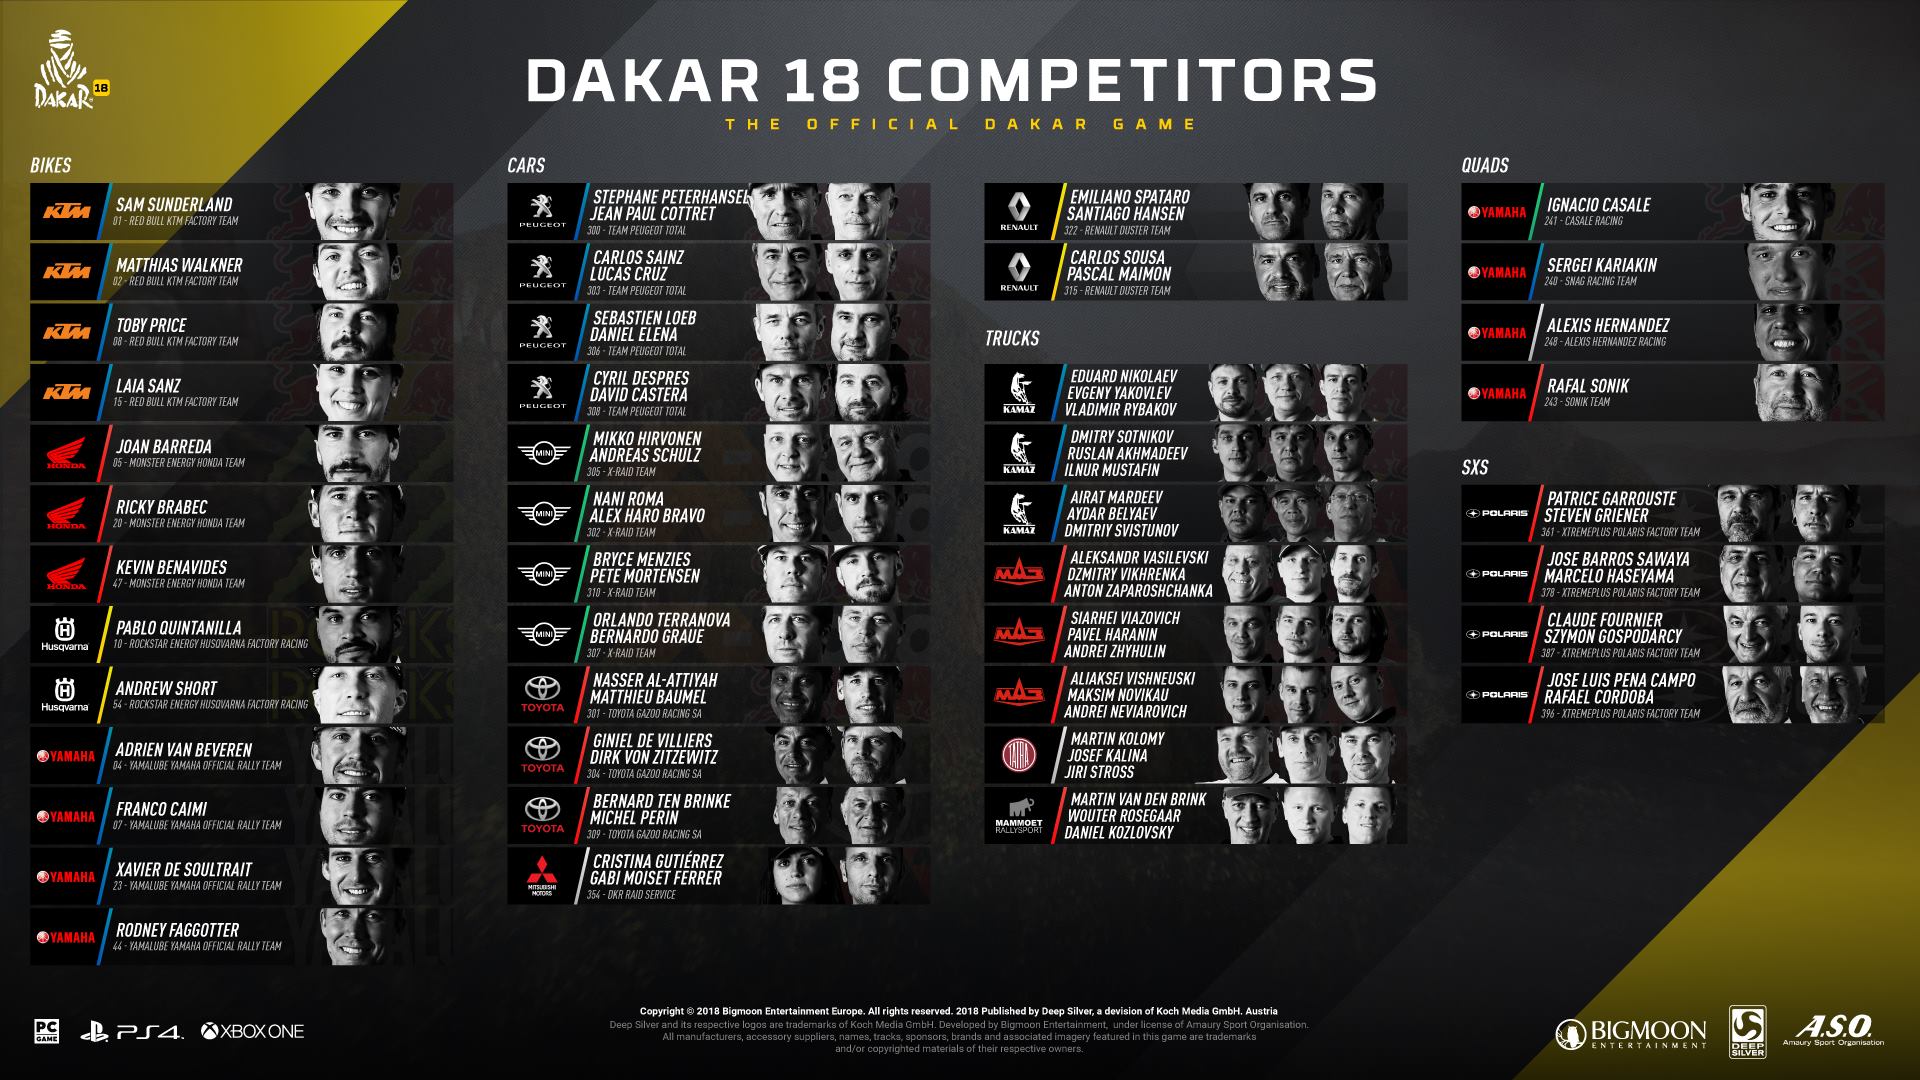 DAKAR 18 Game Drivers and Riders.jpg